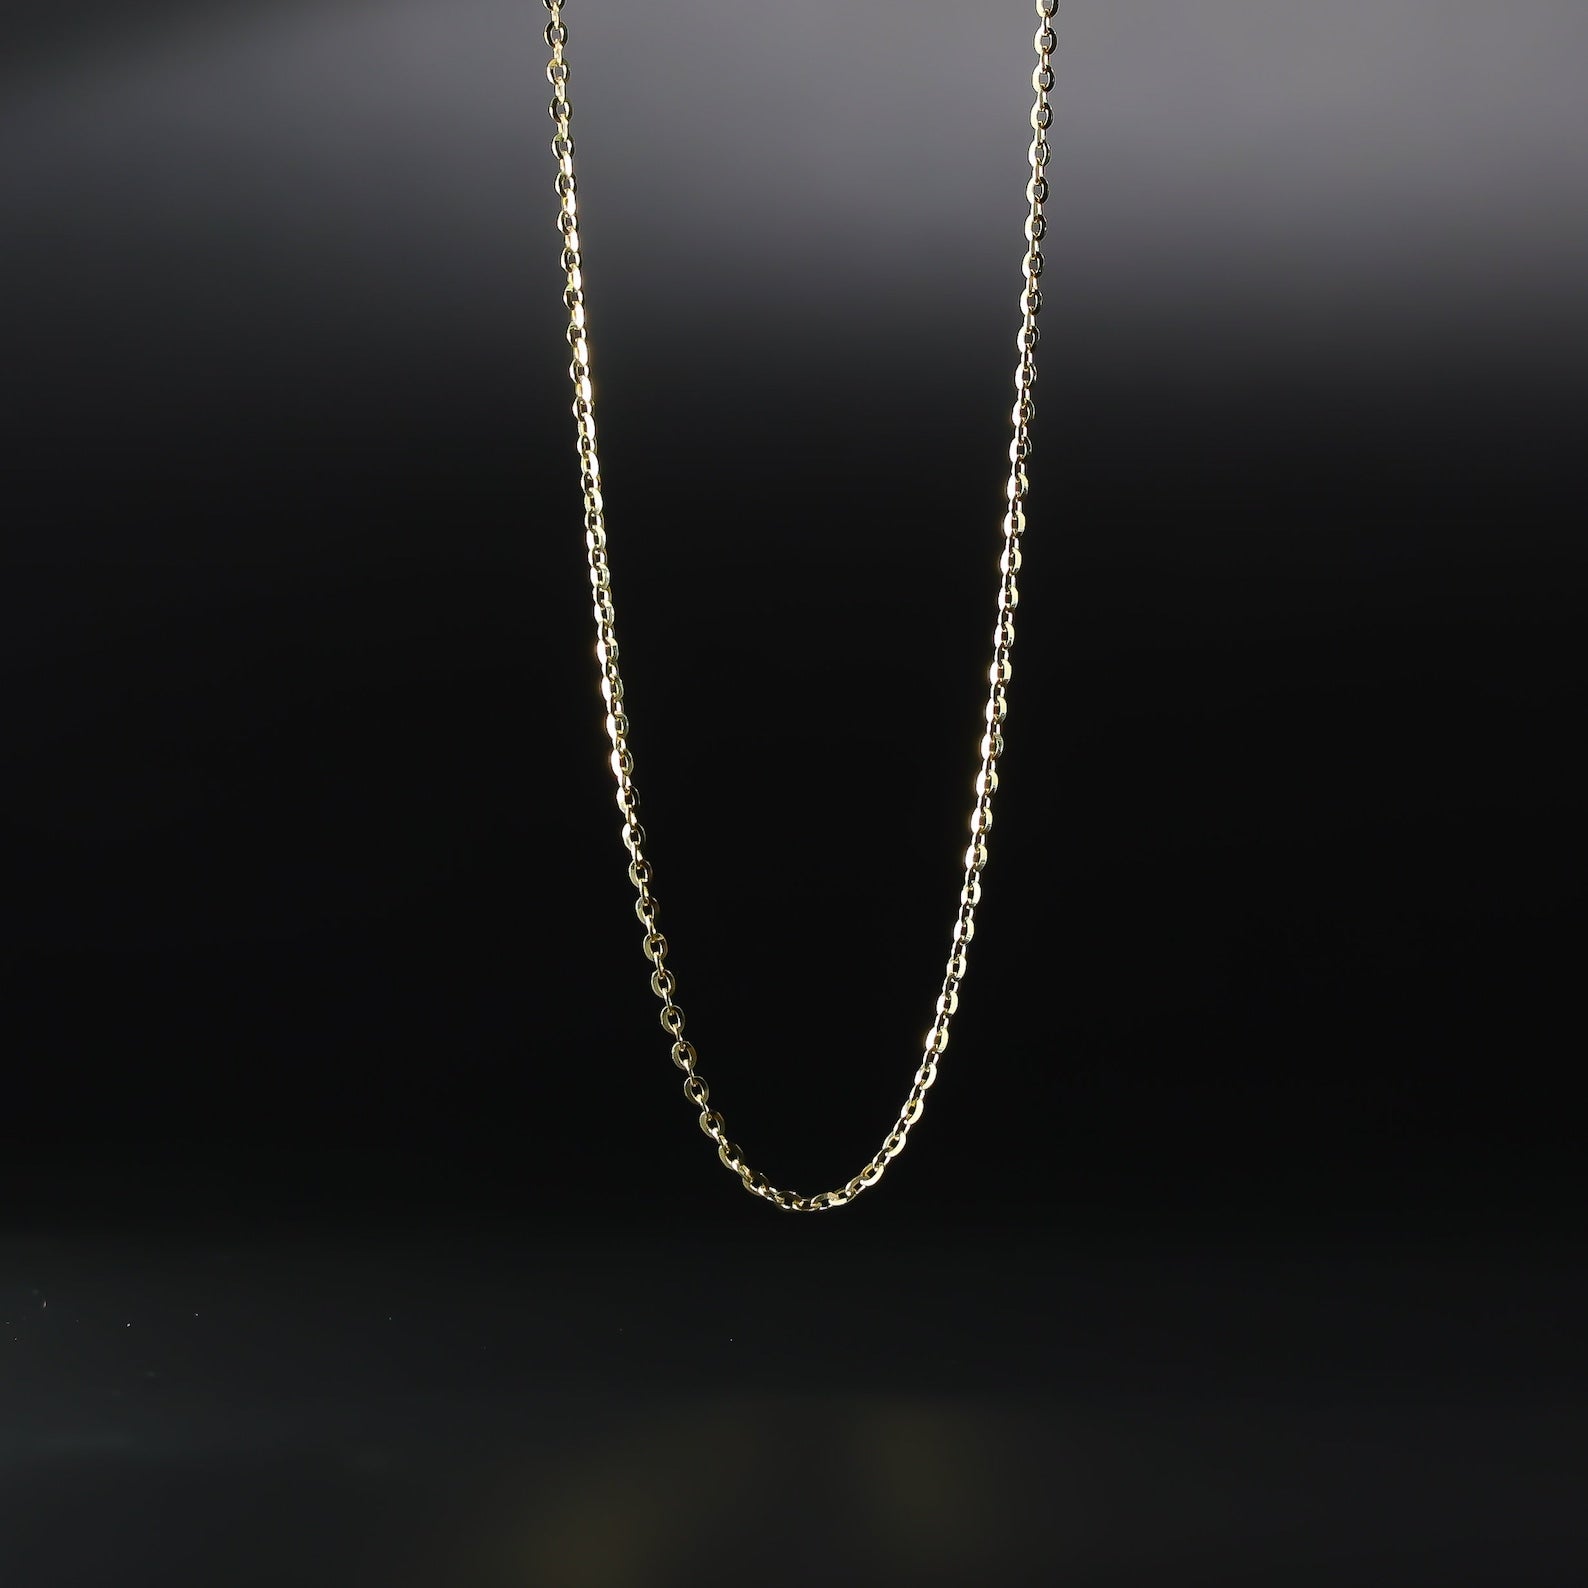 Gold Heart Locket Pendant Model-2038 - Charlie & Co. Jewelry